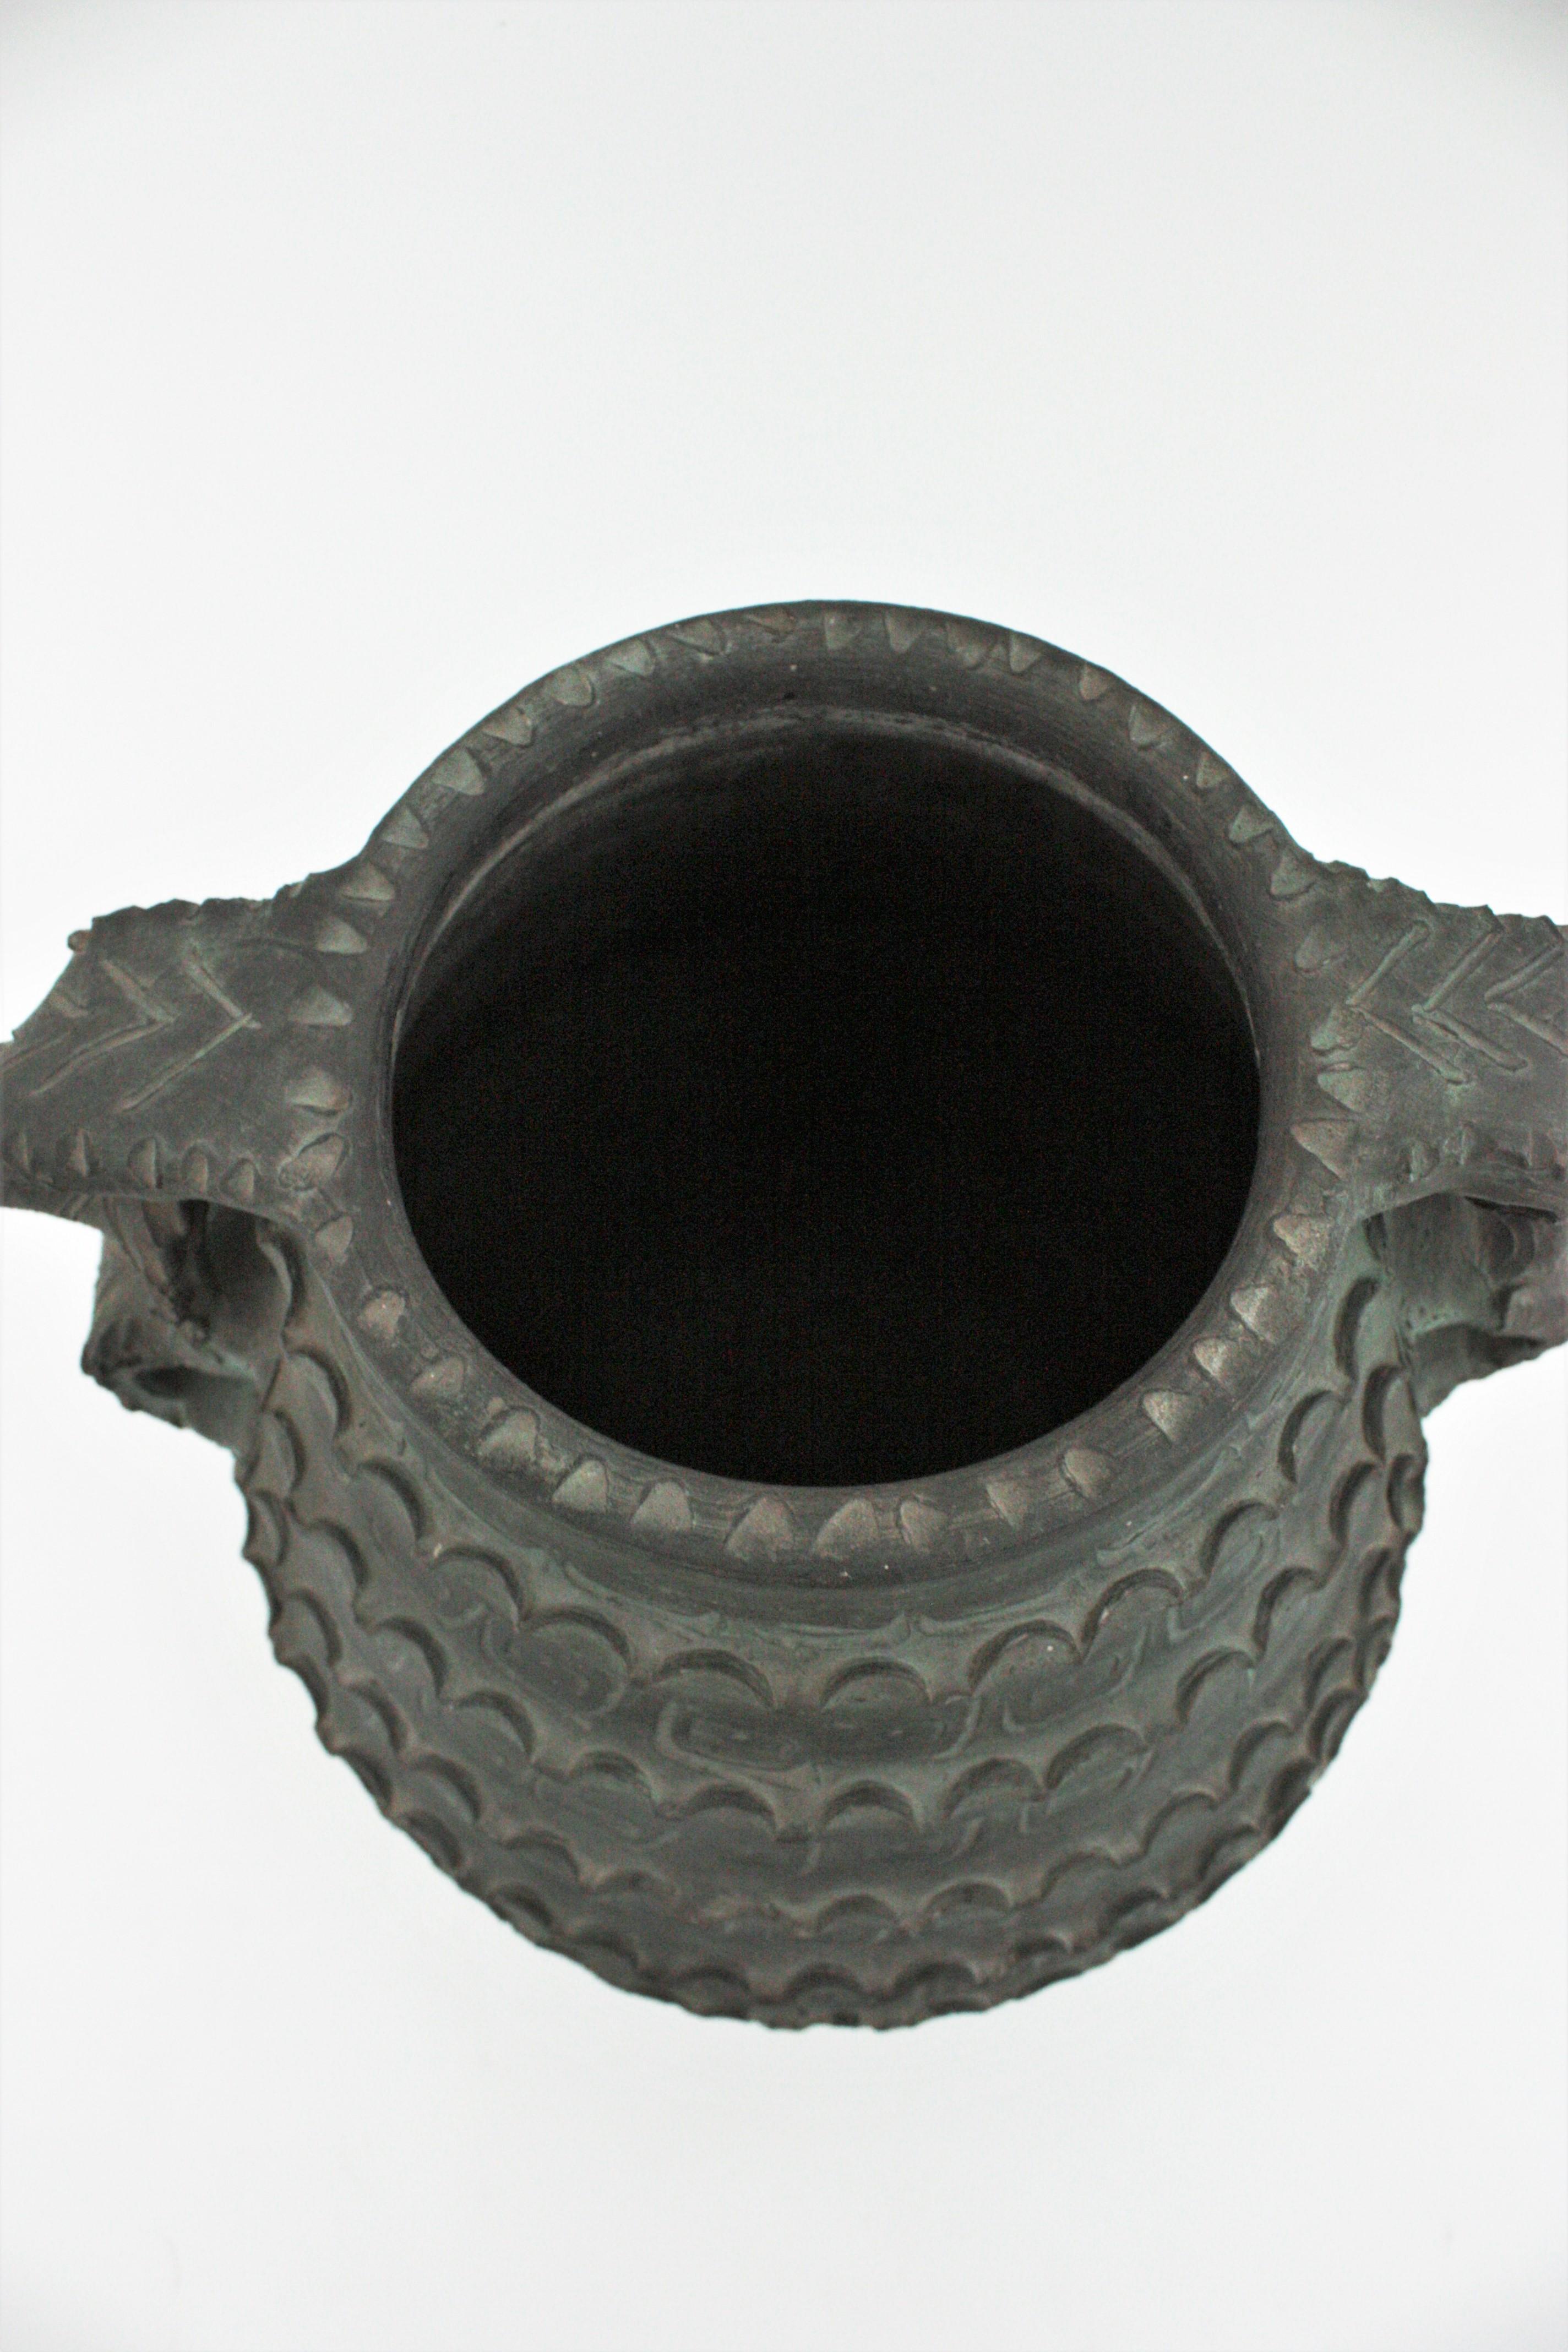 Spanish Green Terracota Urn Vase or Vessel 7